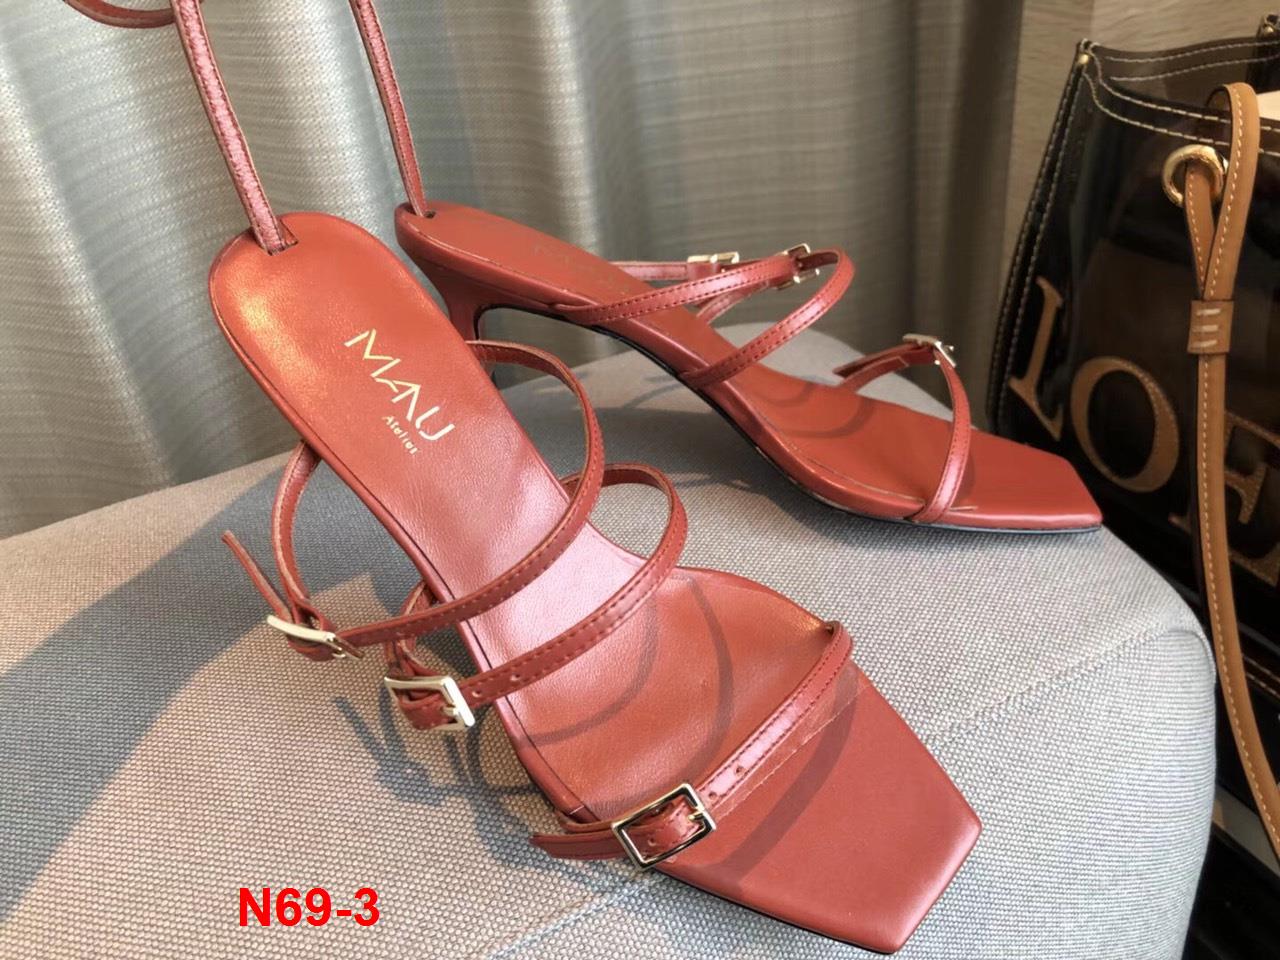 N69-3 Manu Atelier sandal cao 6cm siêu cấp